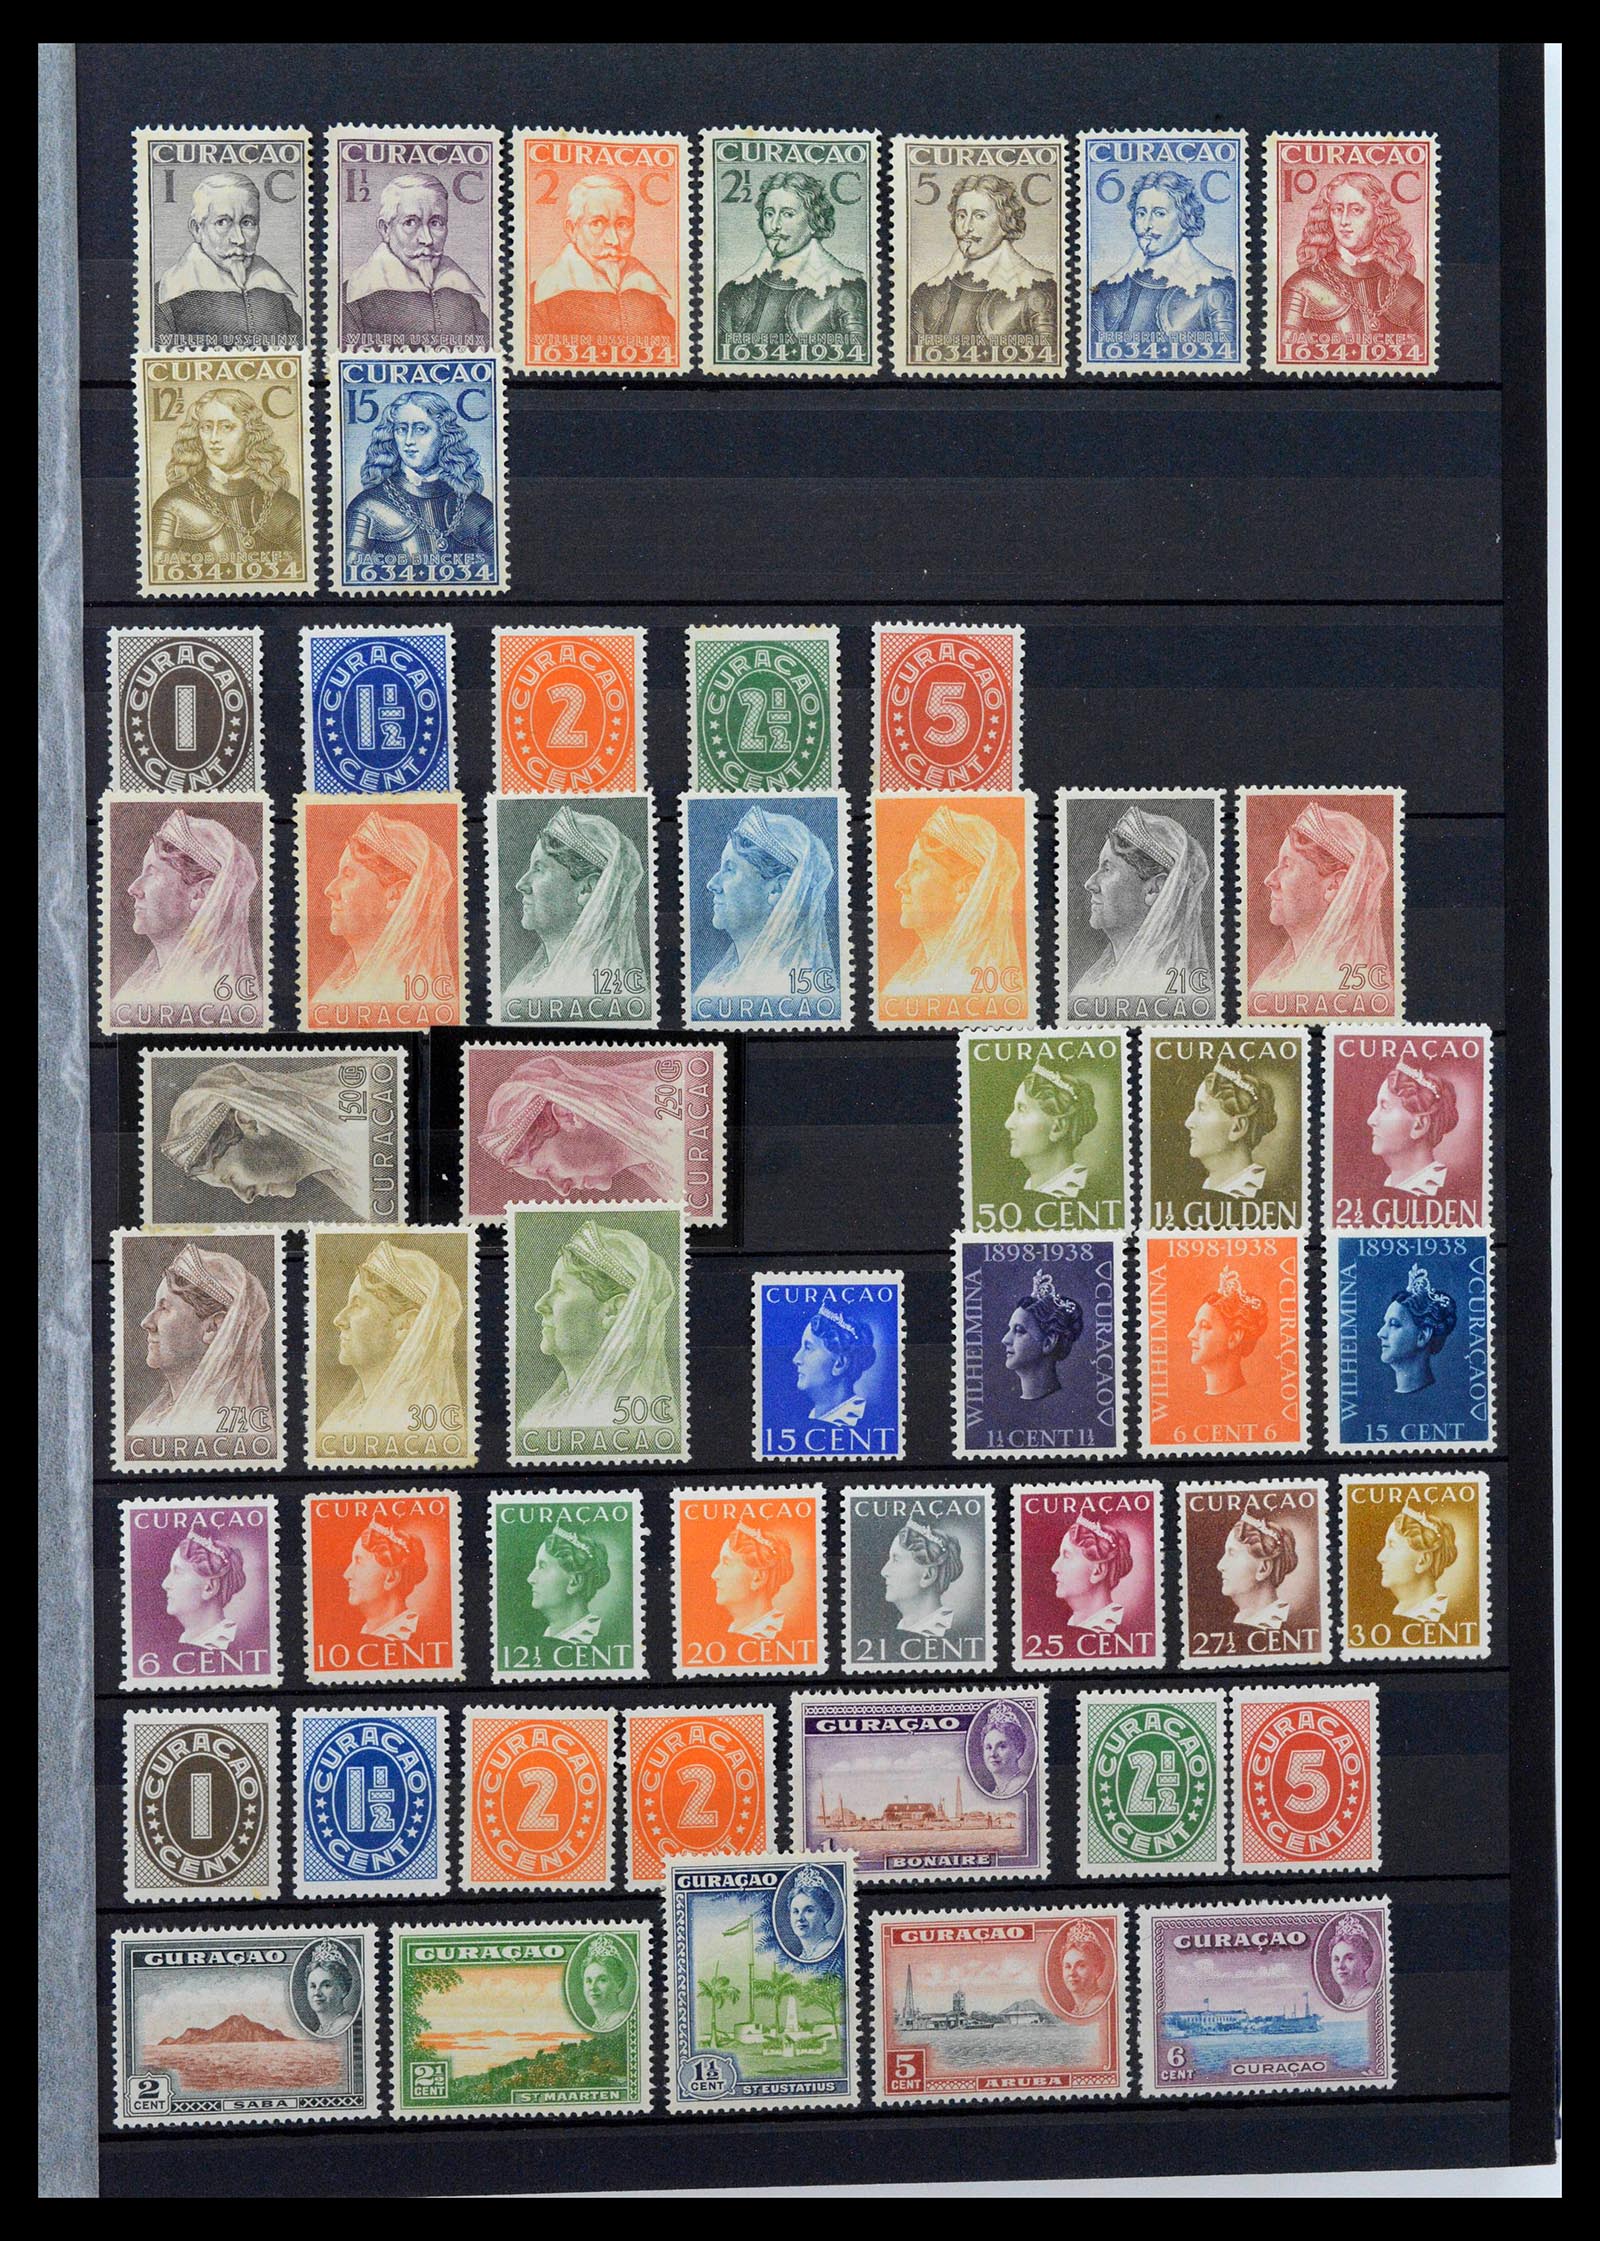 39027 0016 - Stamp collection 39027 Curaçao/Antilles/Aruba 1873-2009.